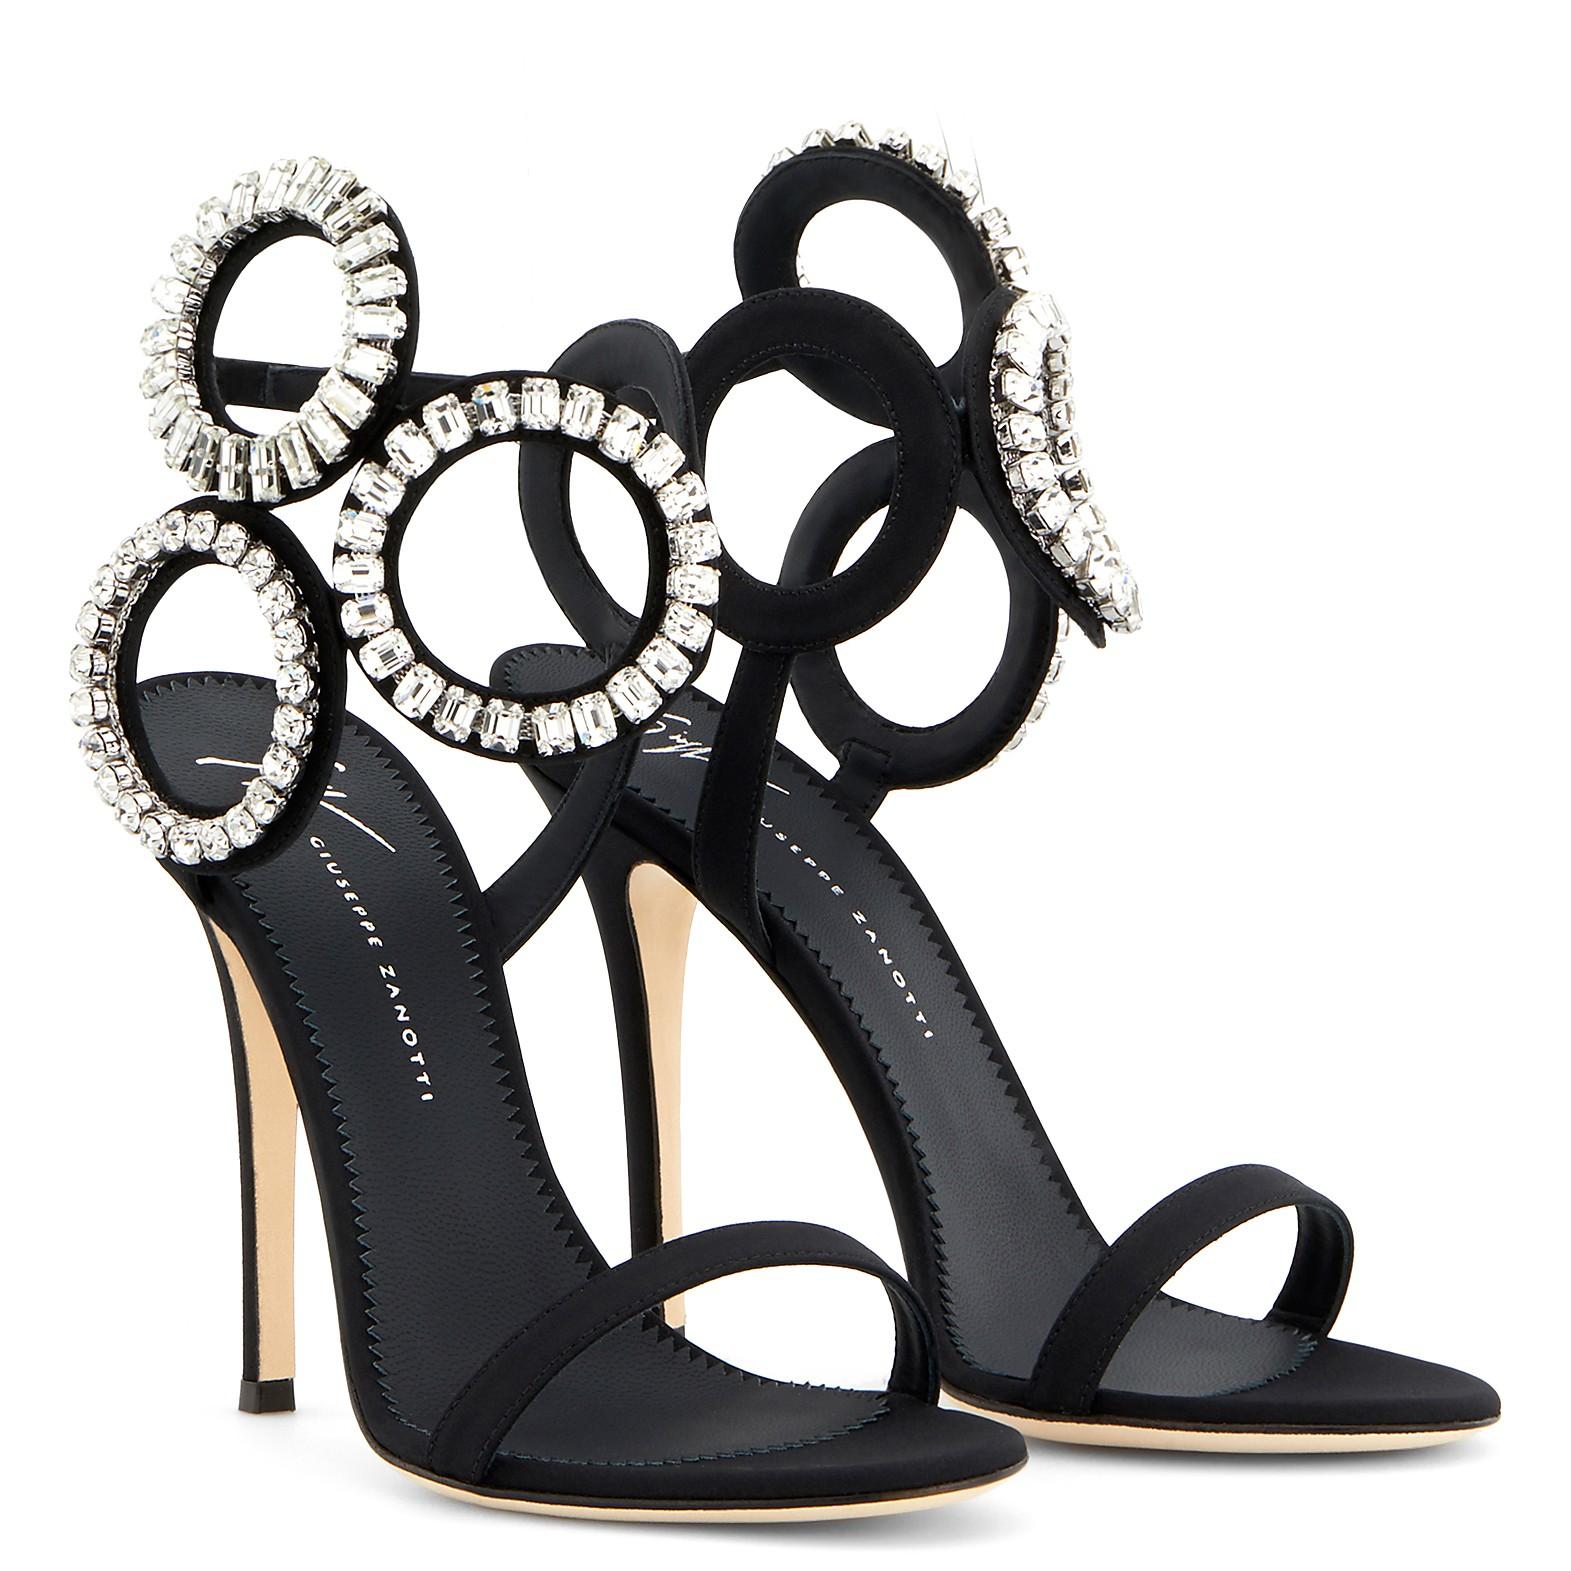 Women's Giuseppe Zanotti NEW Black Swirl Crystal Evening Sandals Heels in Box